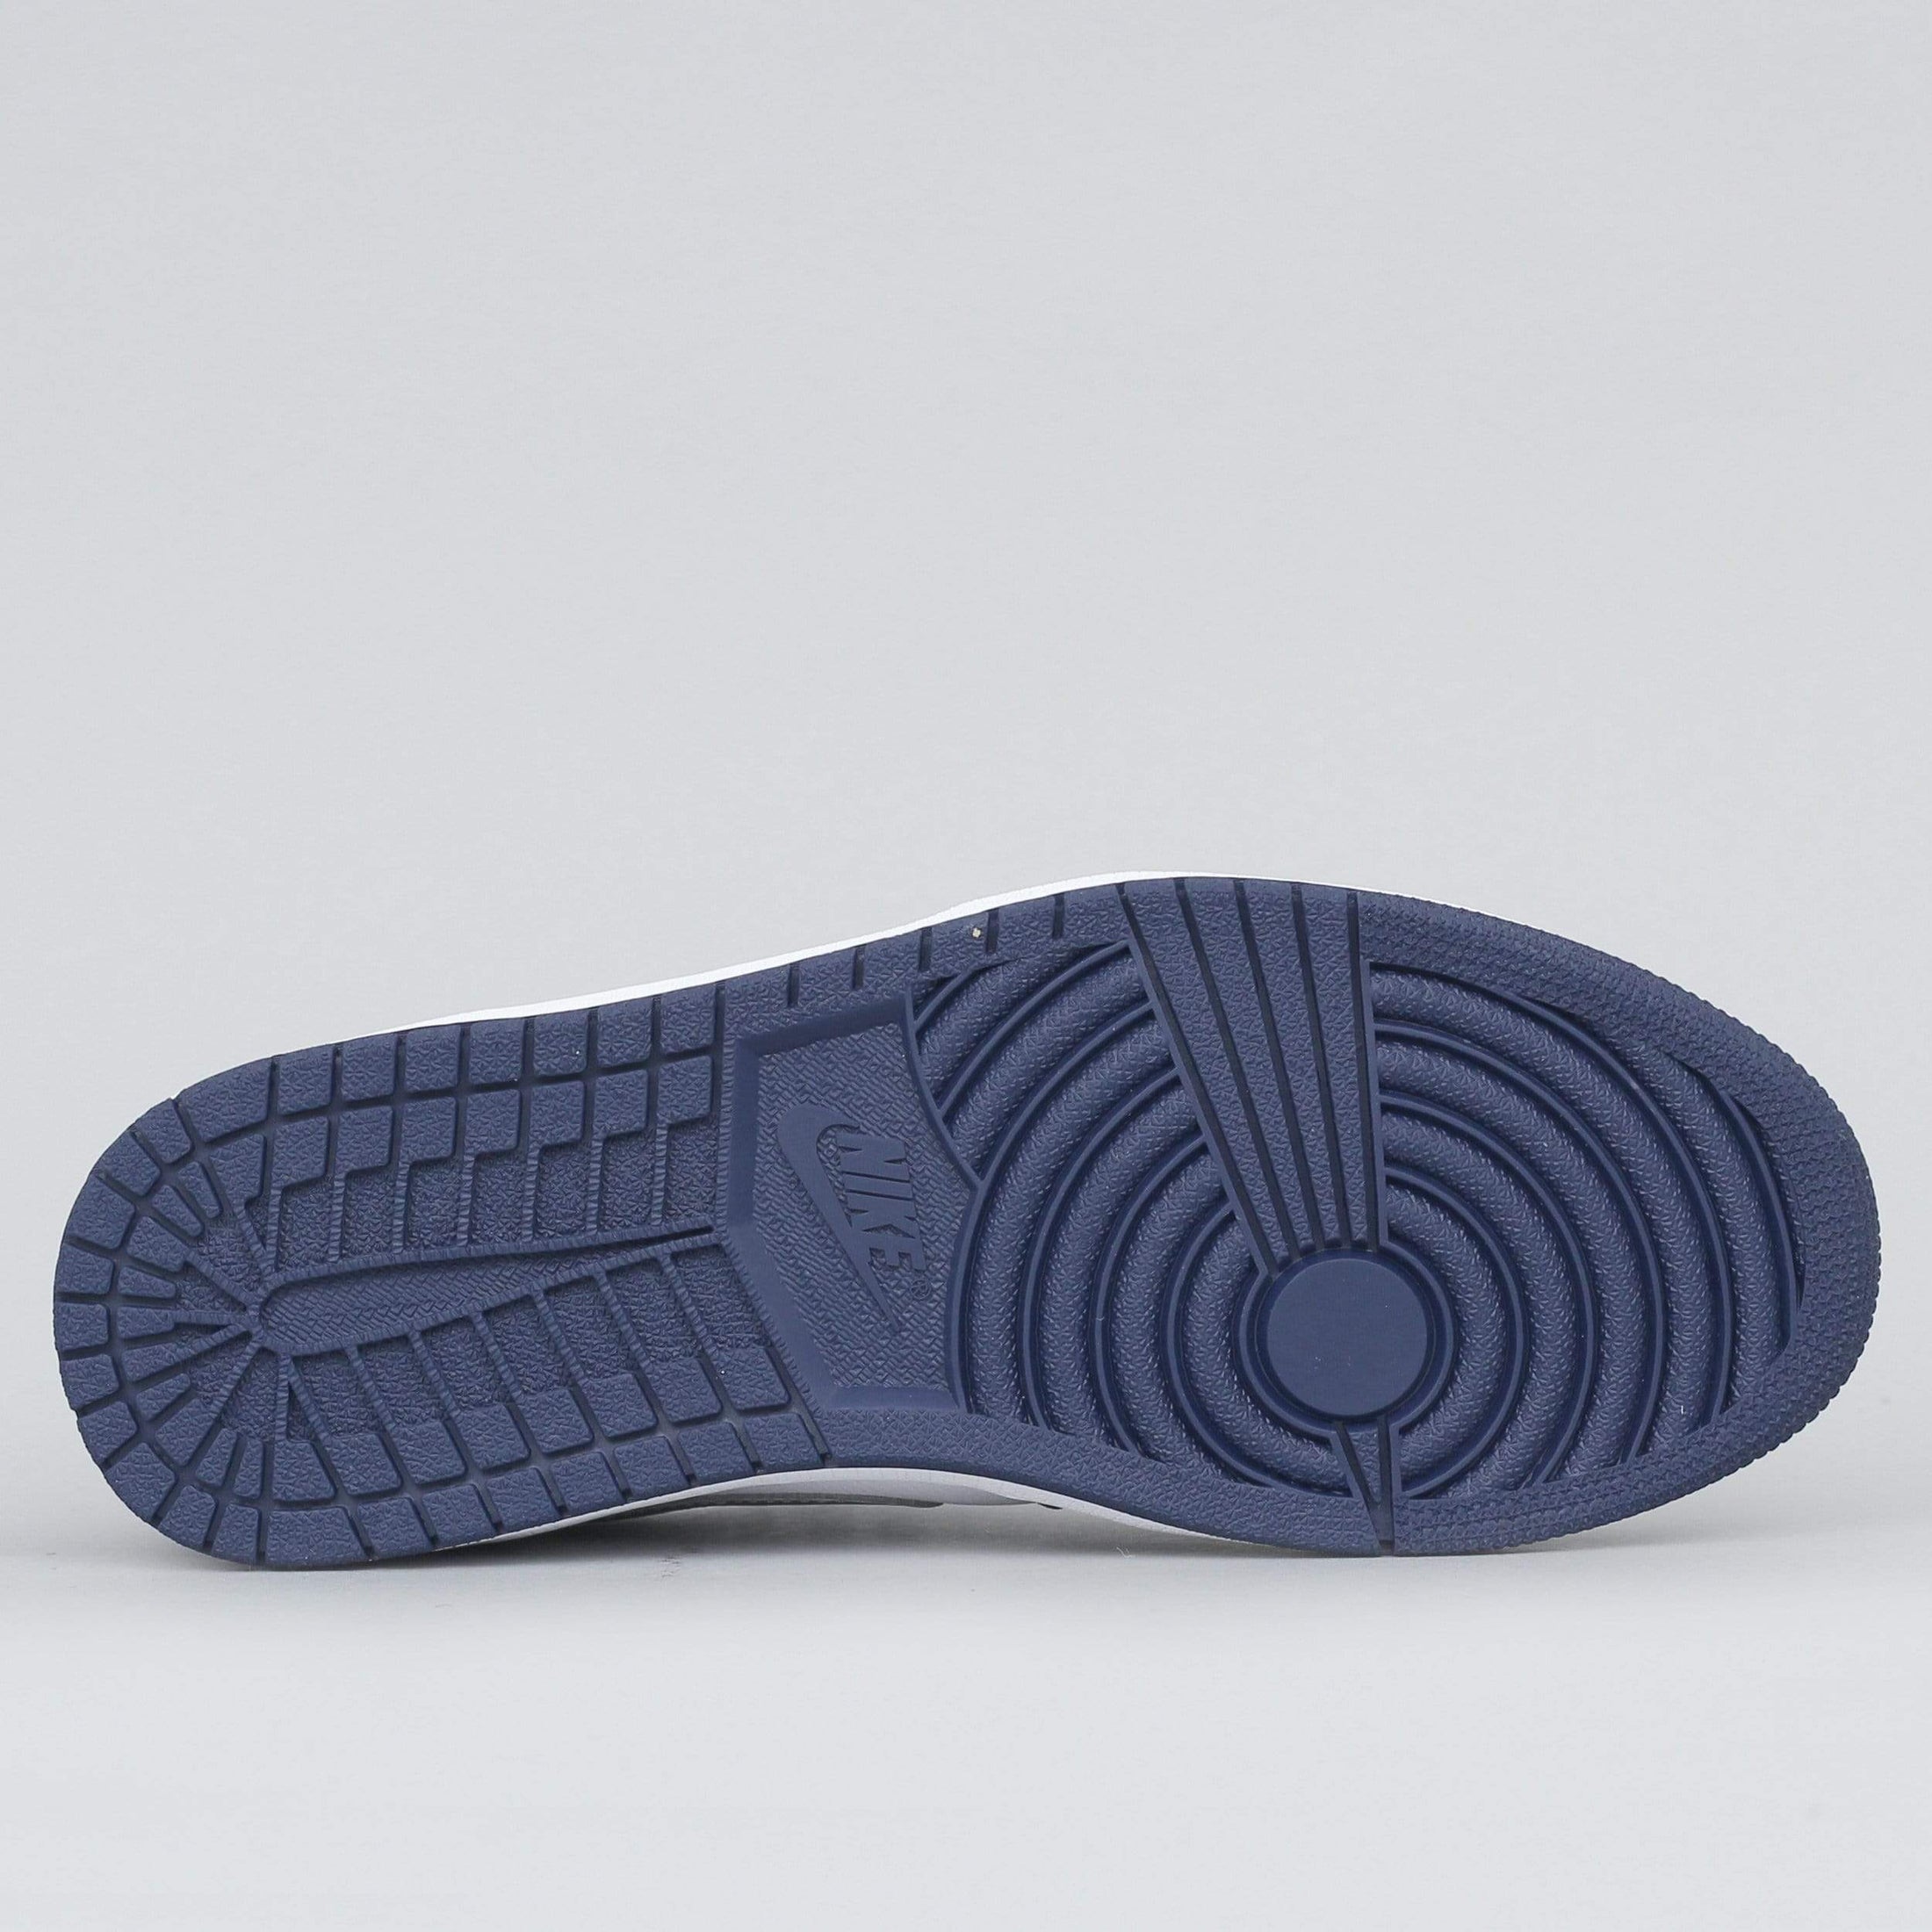 Nike SB Air Jordan 1 Low QS Shoes Midnight Navy / Metallic Silver